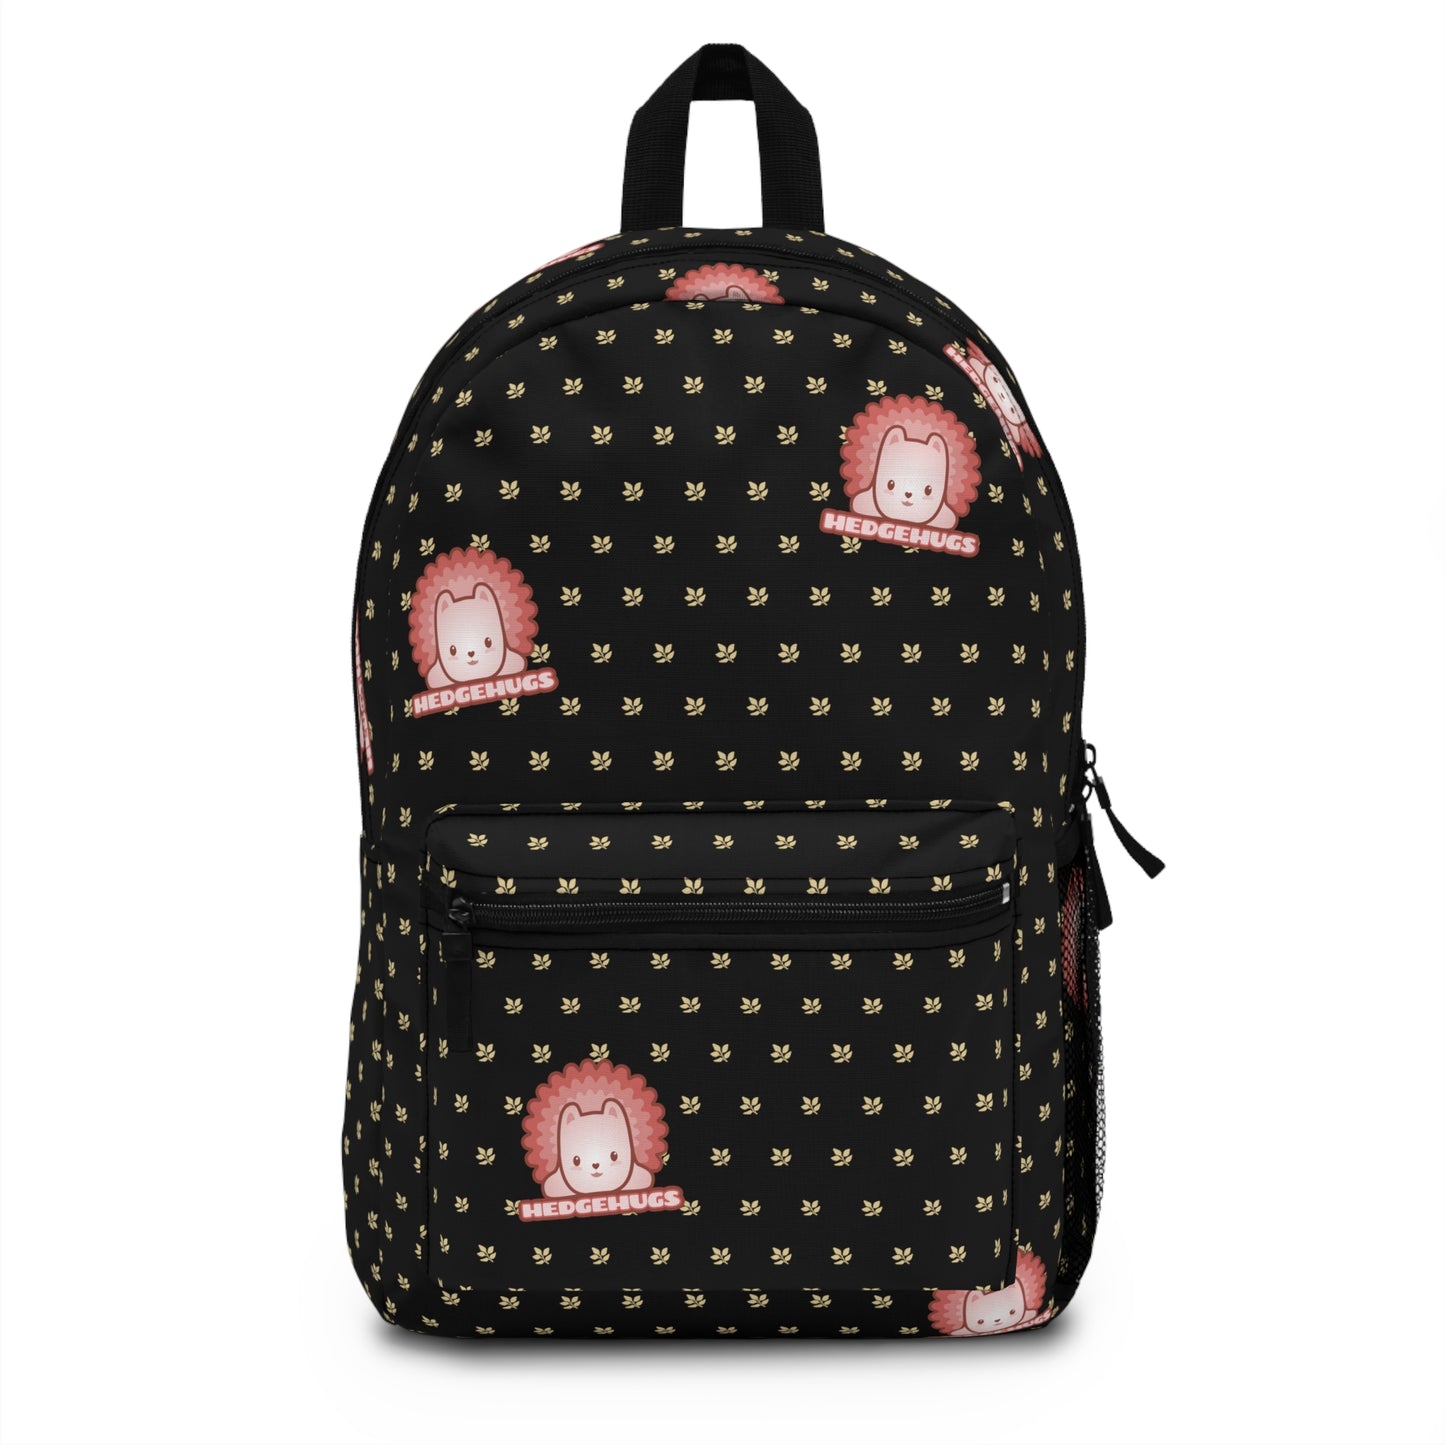 Cute Hedgehog Backpack - “Hedgehugs” by Small and Simple Things